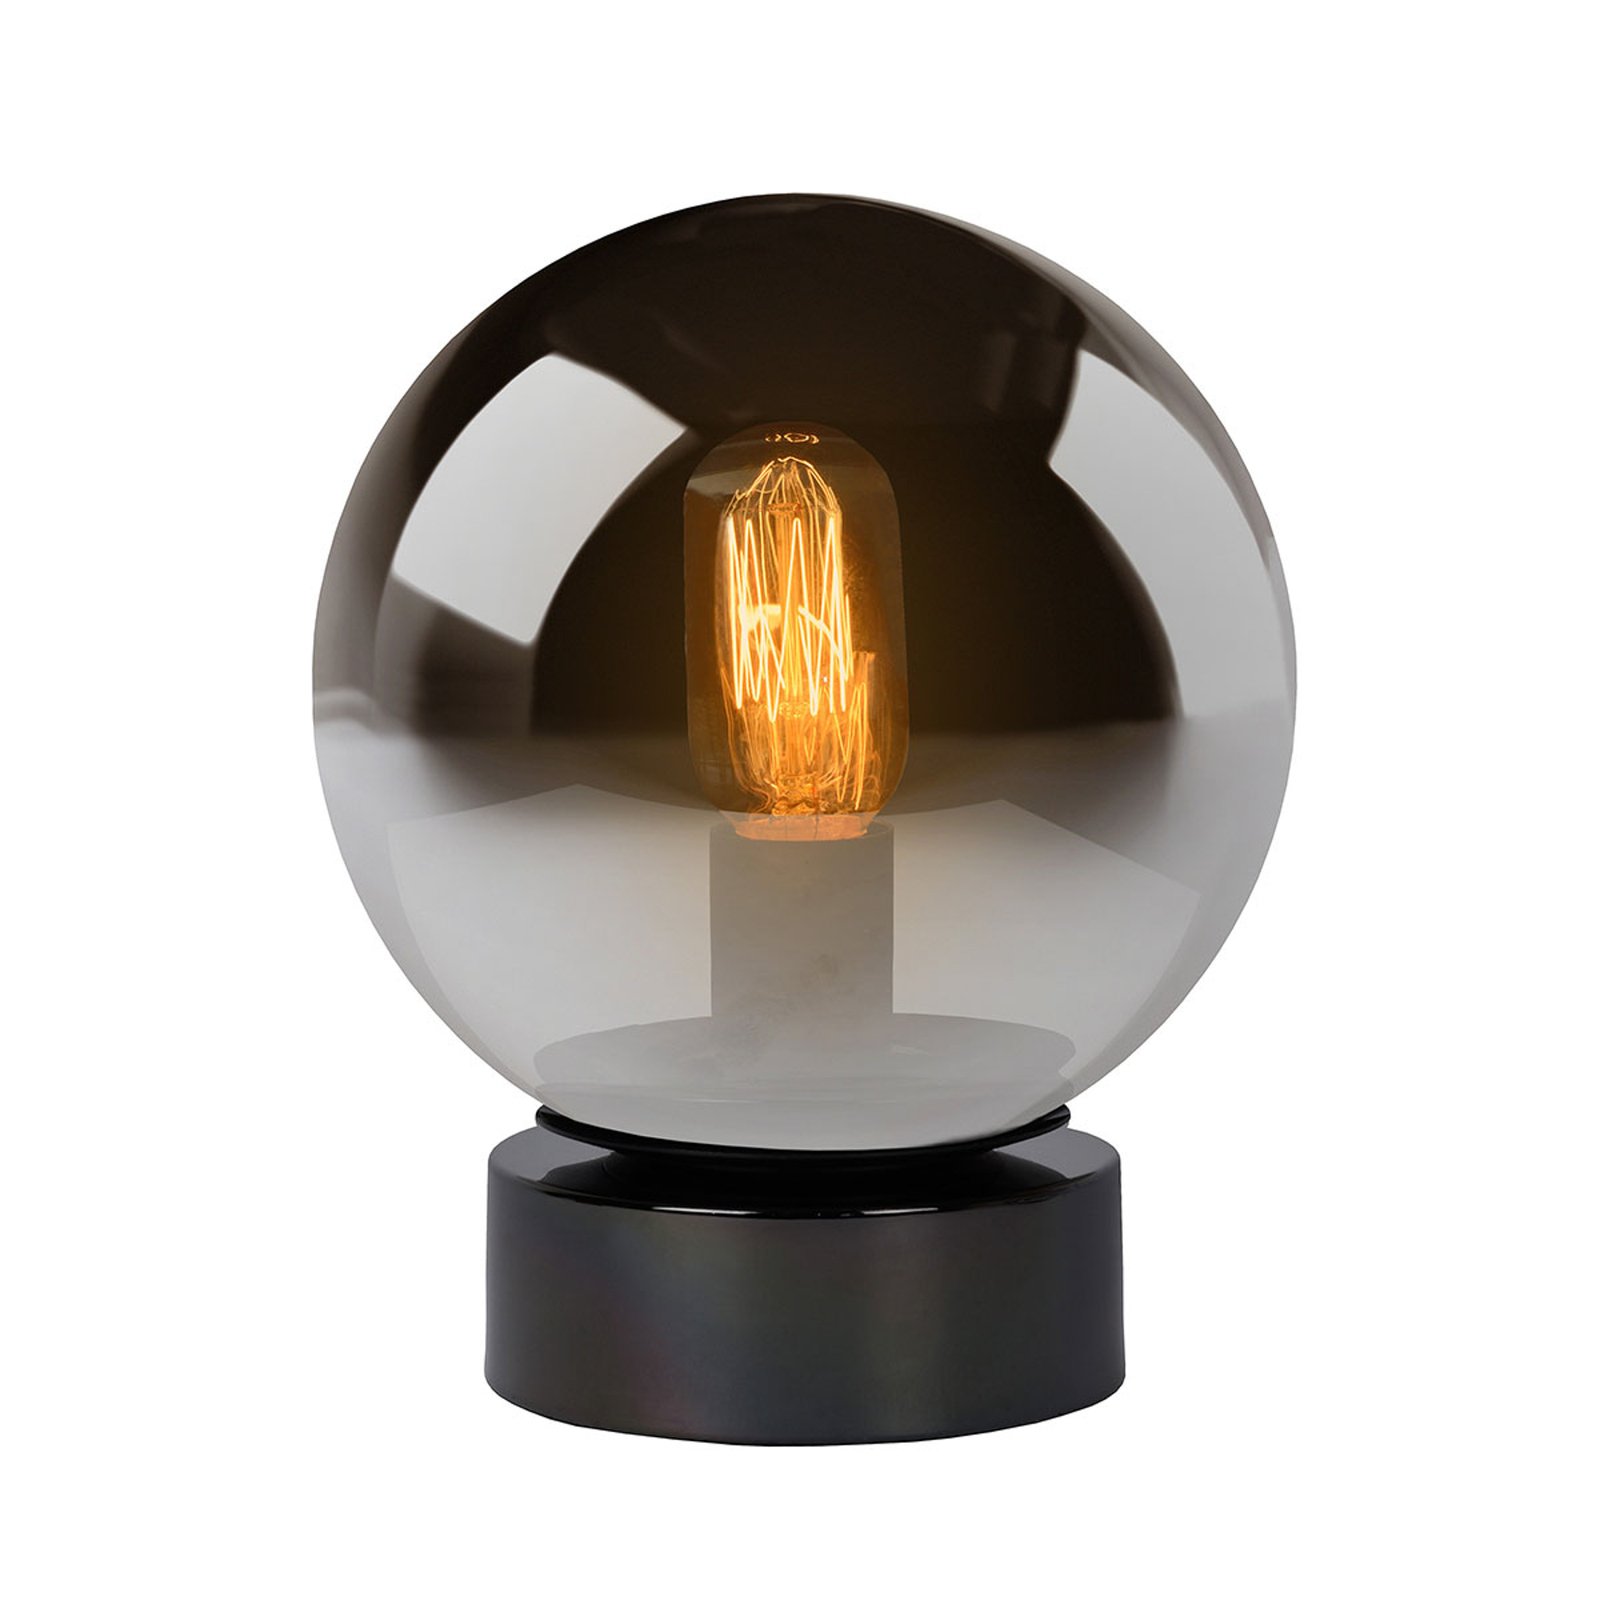 Jorit - glazen tafellamp met bolvormige kap 20cm